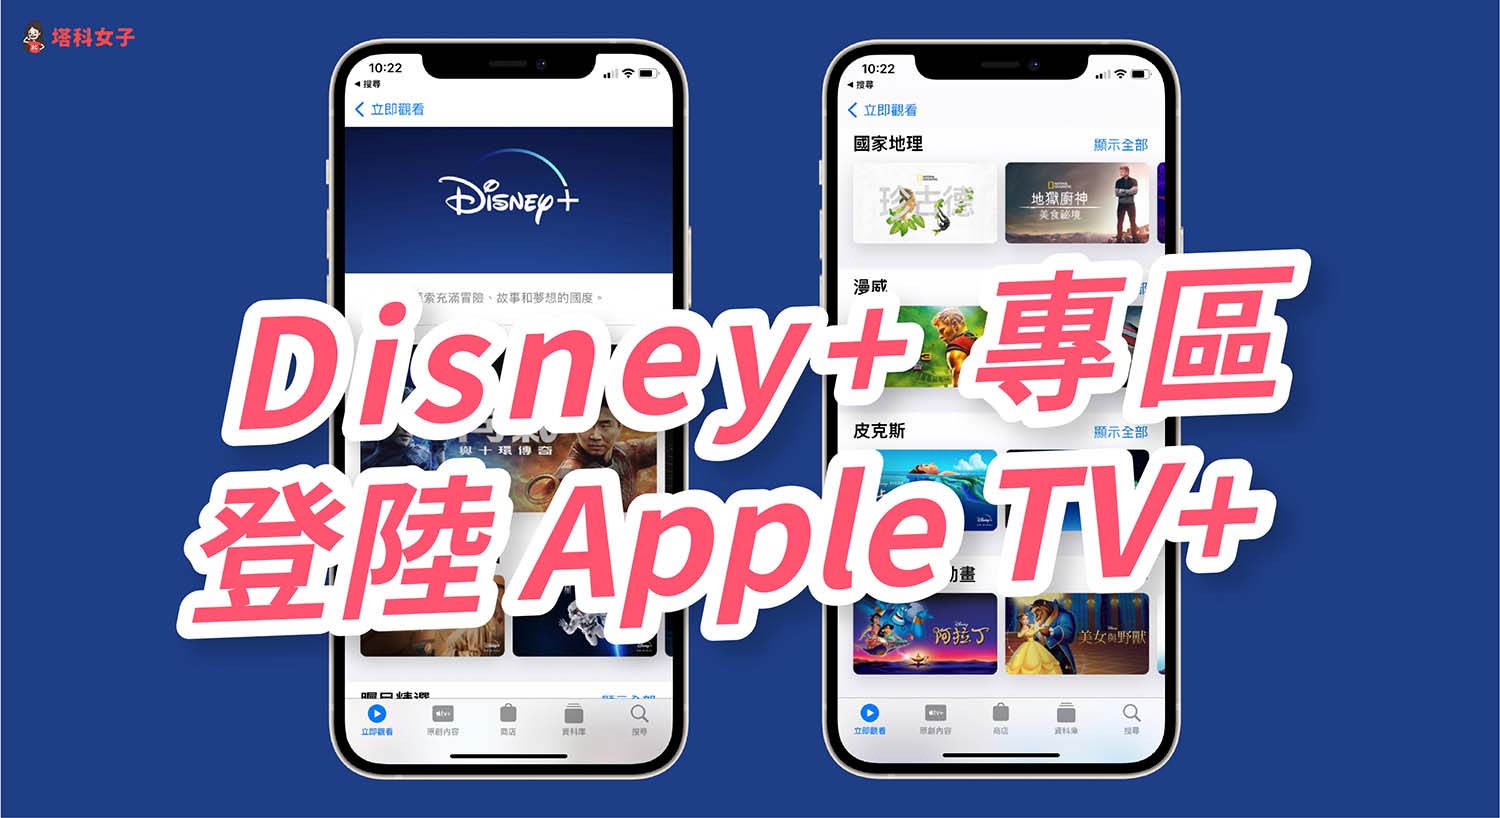 Disney+ 登上 Apple TV+，可聲控 Siri 播放迪士尼電影或影集